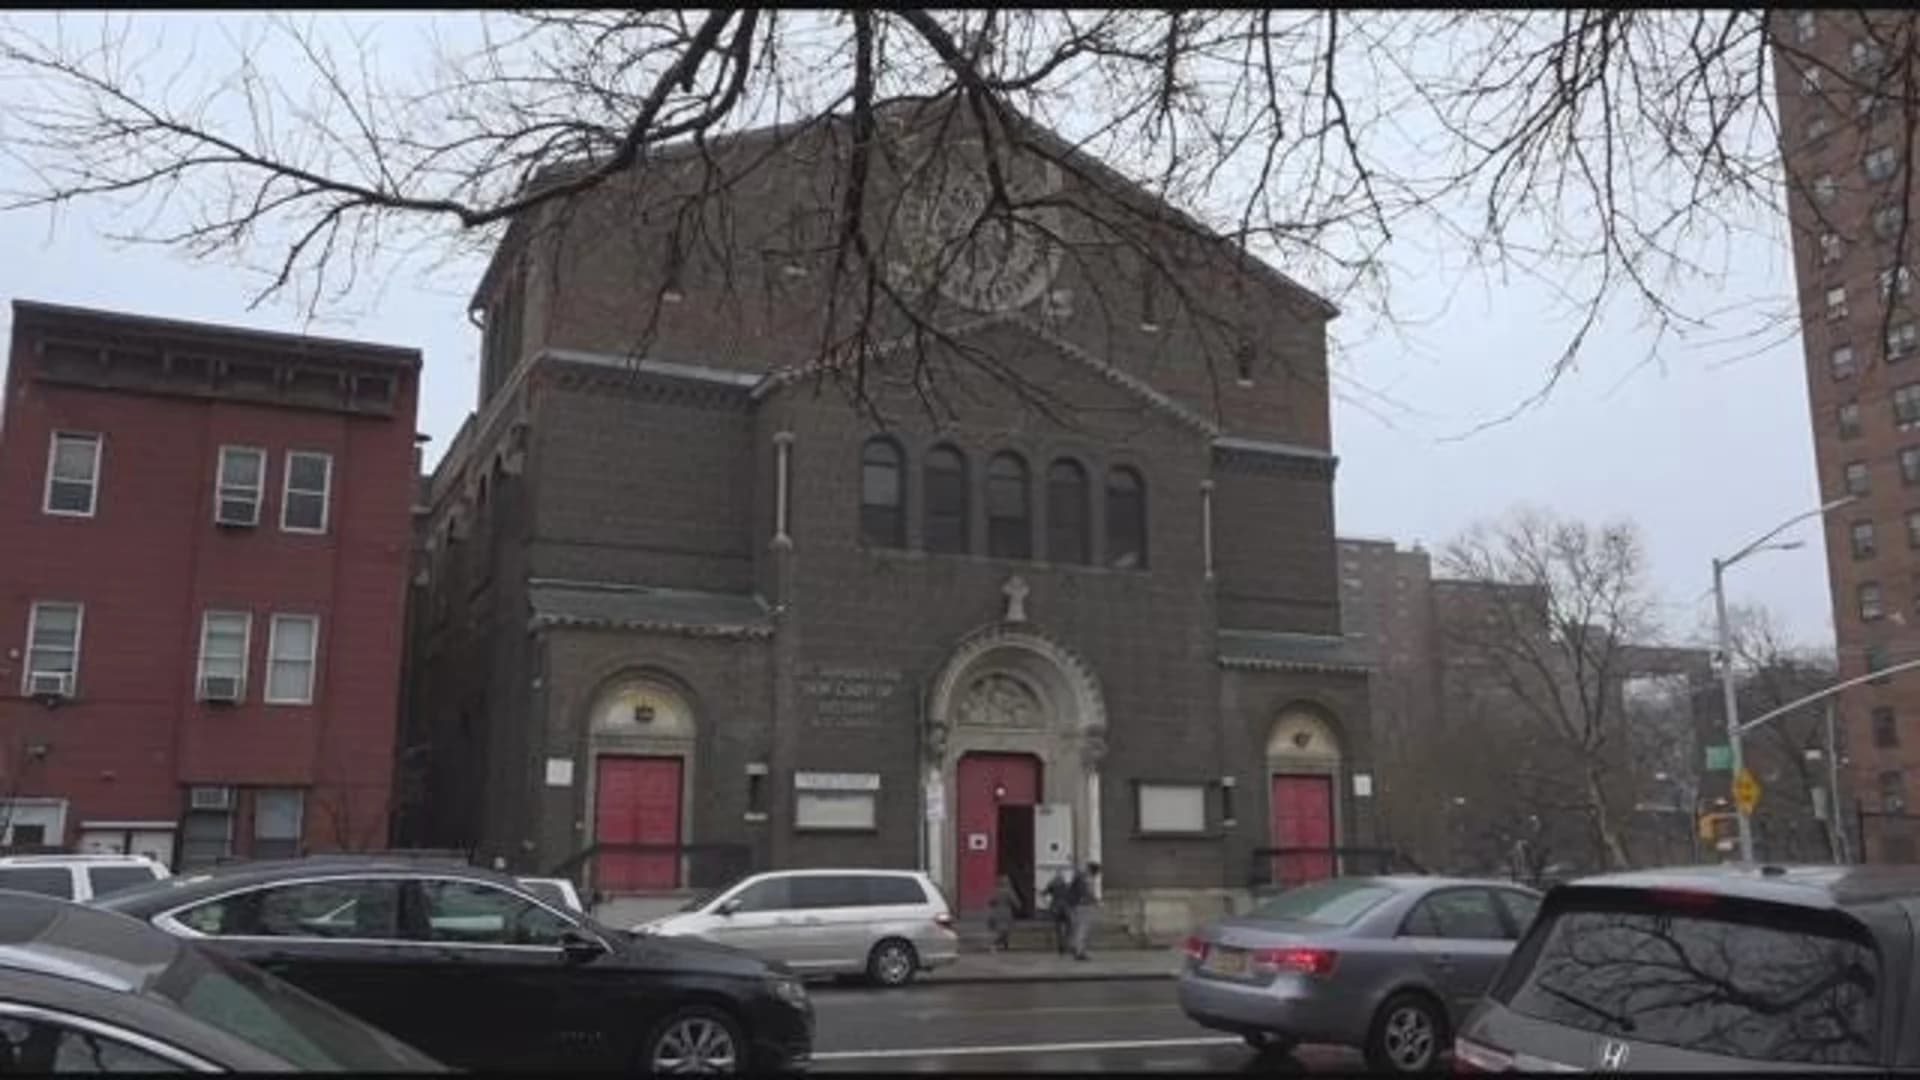 Parishoners at Claremont church claim money is being mismanaged